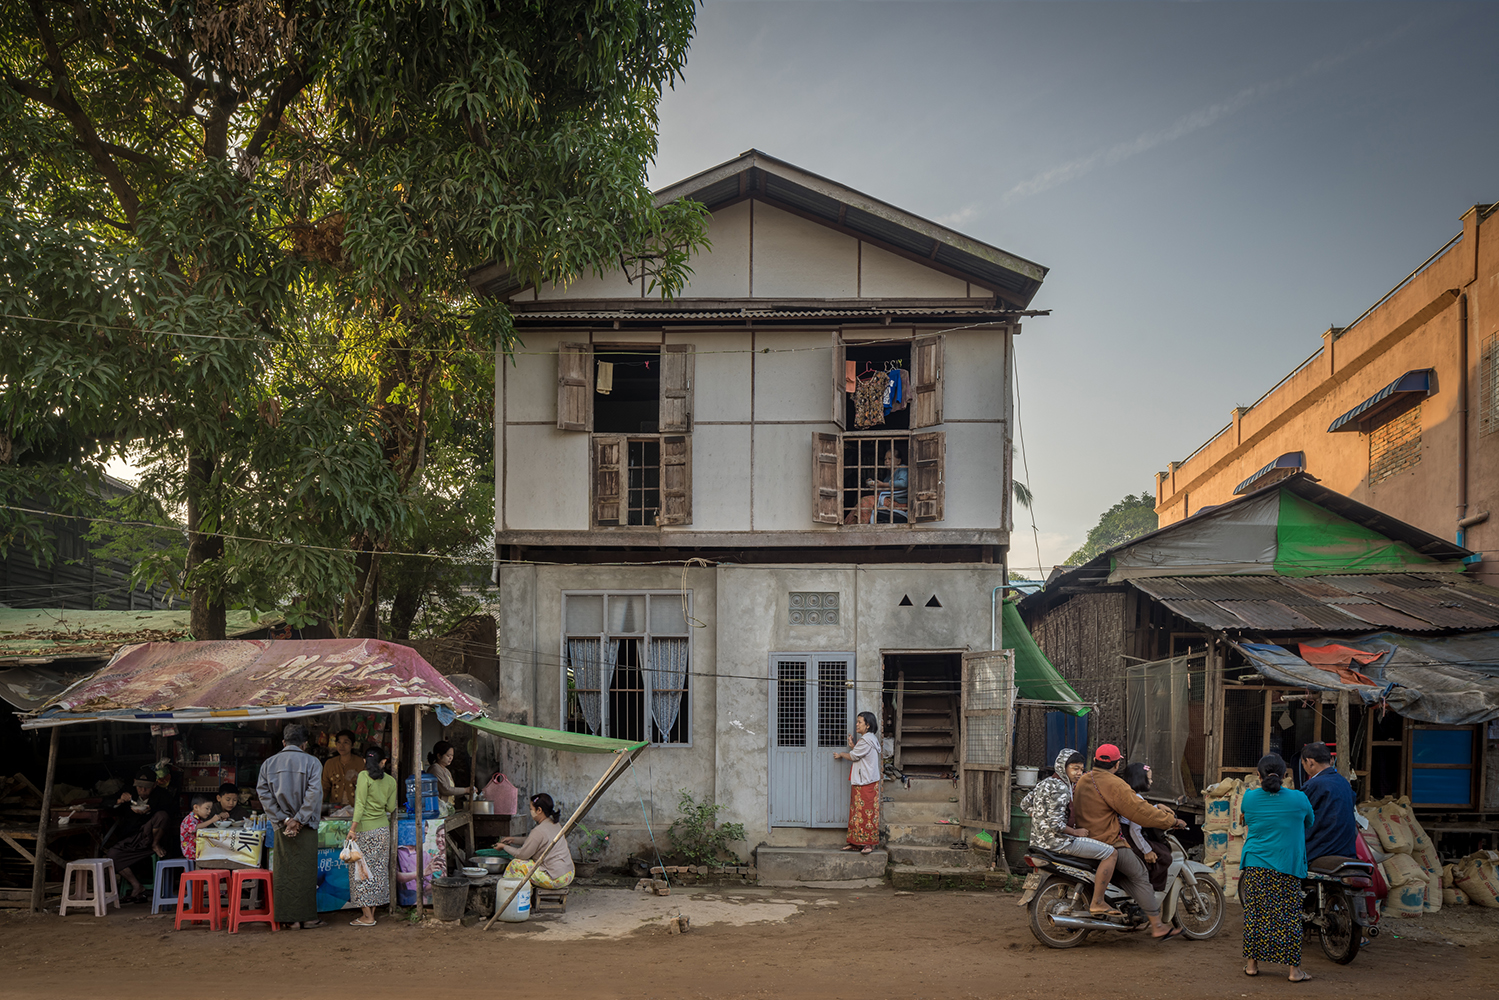  Eric West, Mawlamyine, Burma 